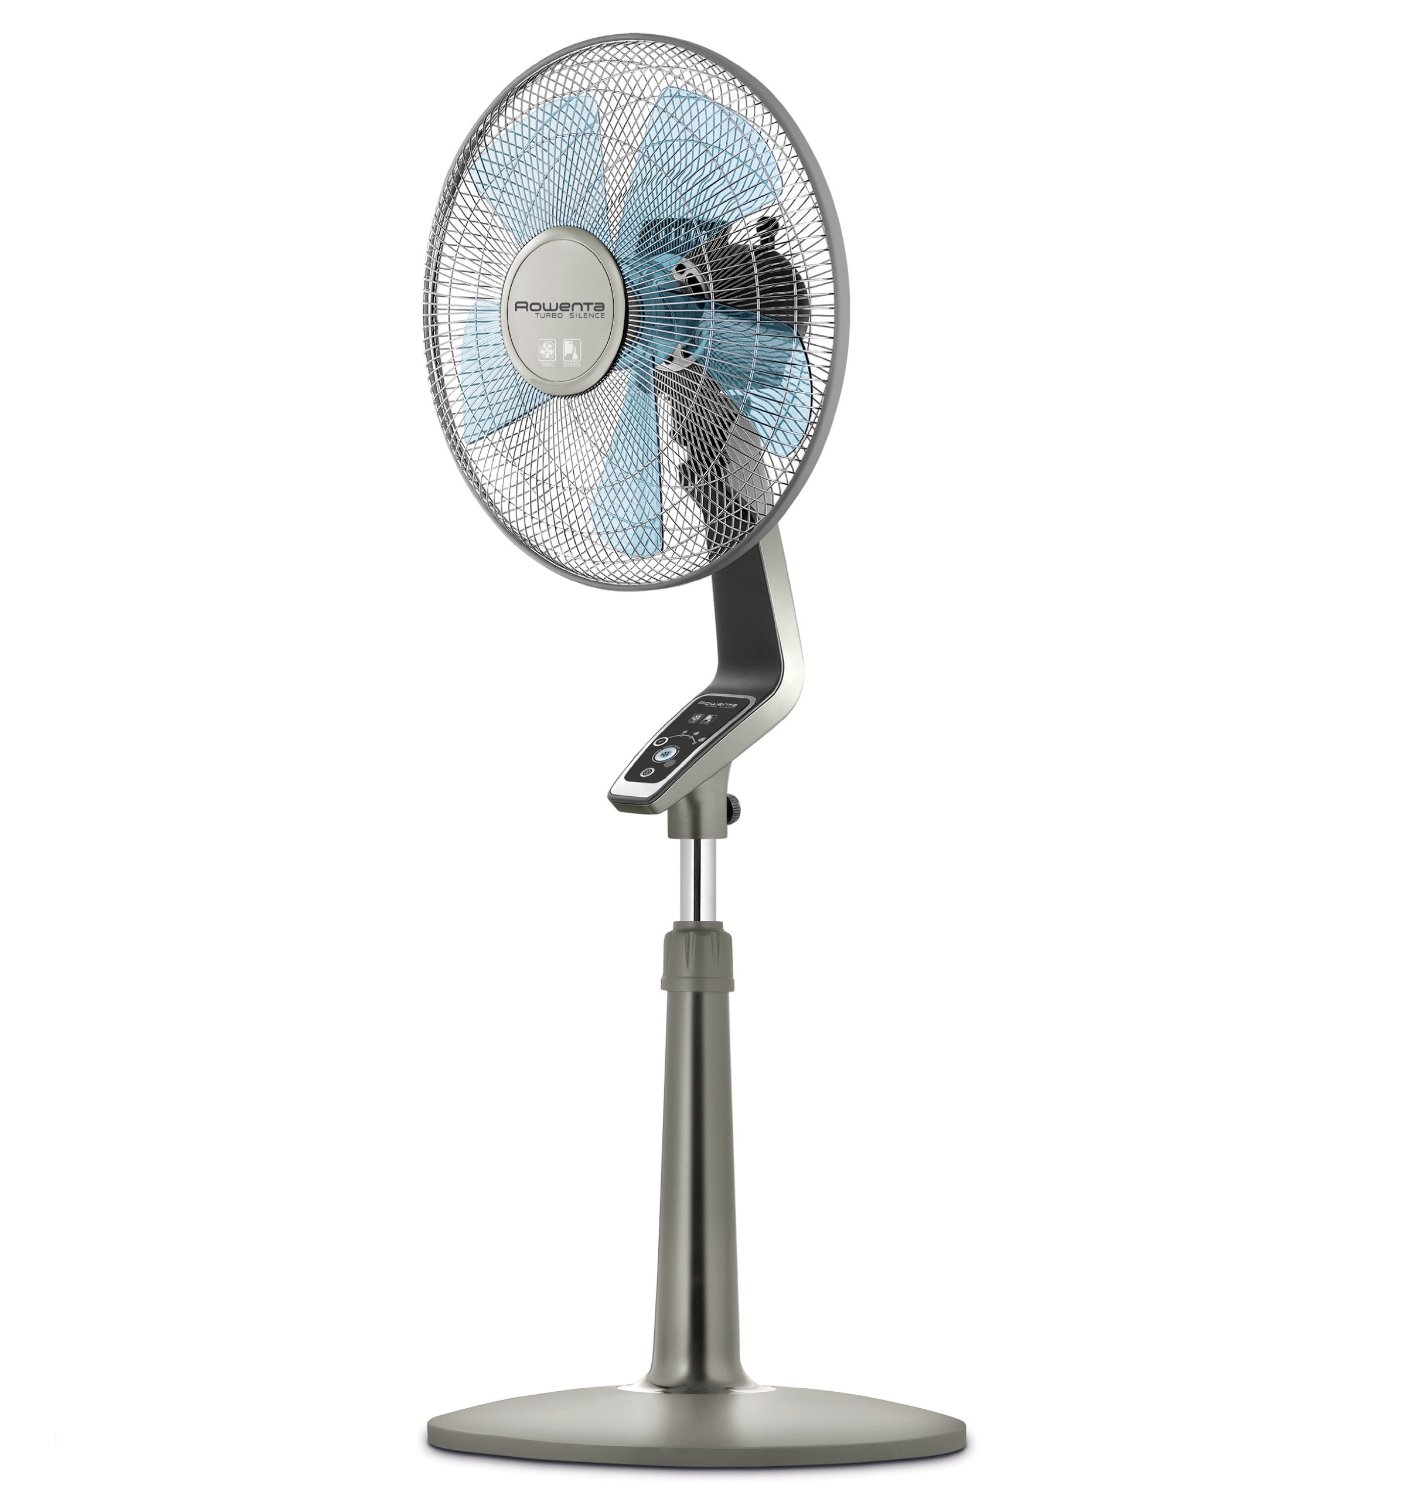 Rowenta Turbo Silence Oscillating 16-Inch Stand Fan – Just $79.99!